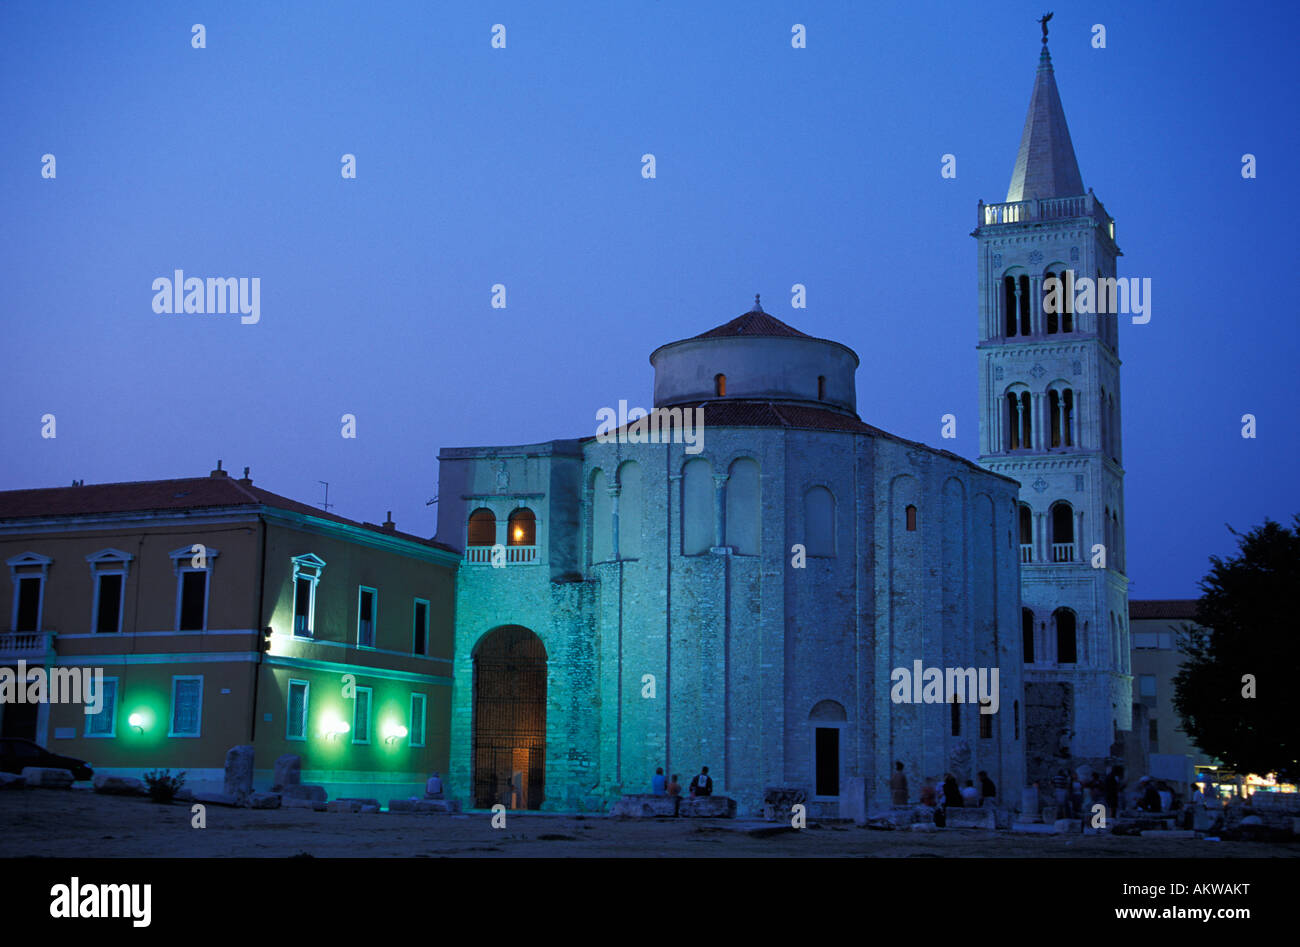 Church St Donat and Cathedral of St Anastasia Old Town Zadar Dalmatia Croatia Stock Photo